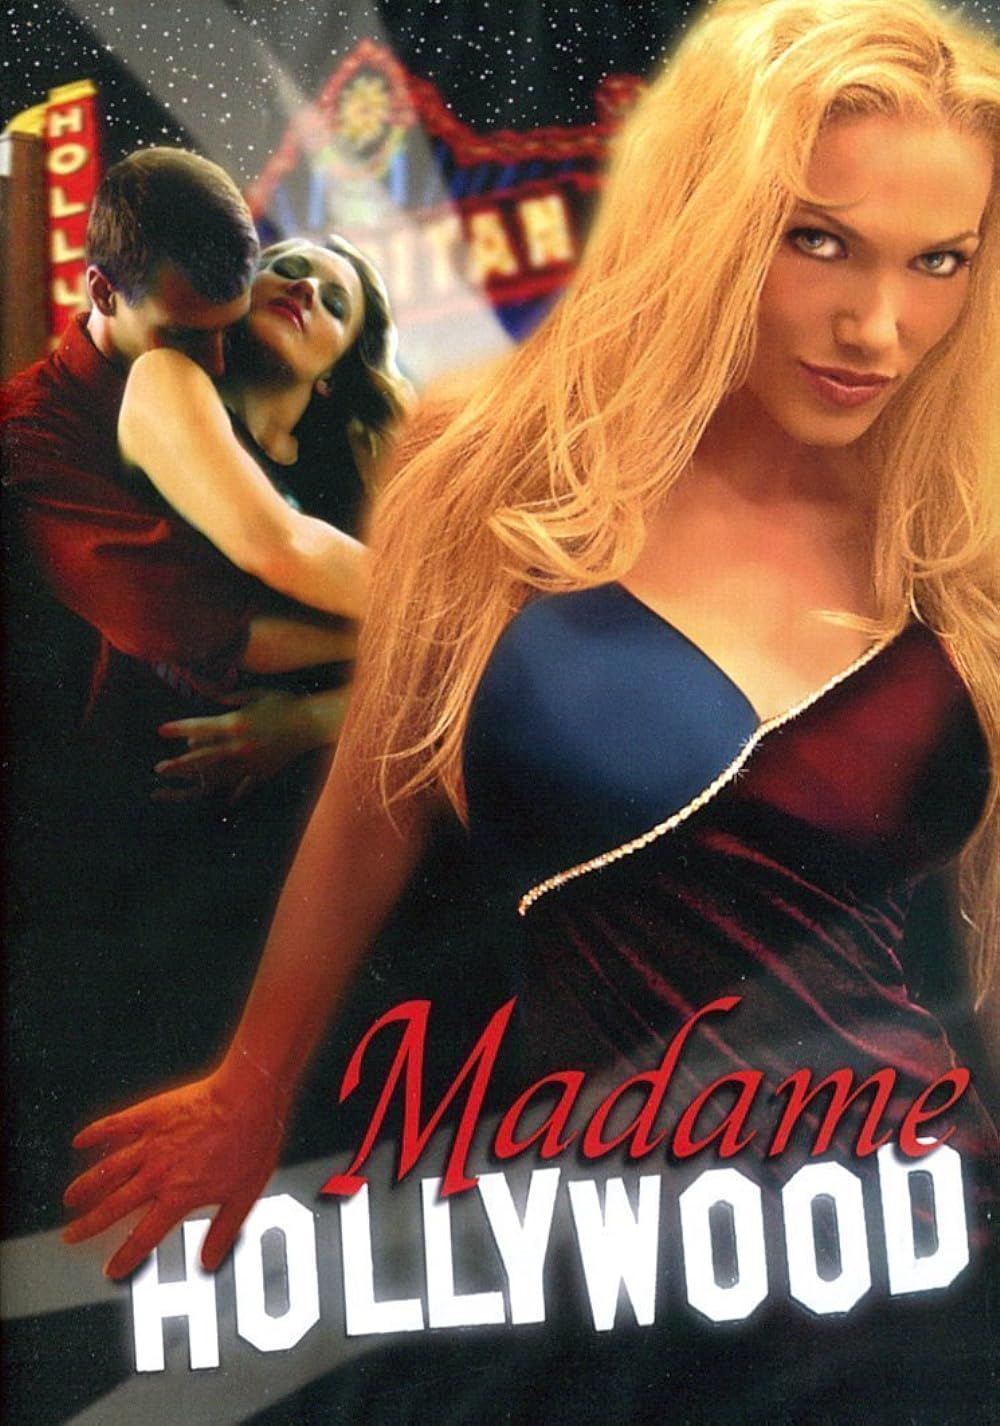 Madame Hollywood (2002) 480p HDRip English Adult Movie [250MB]